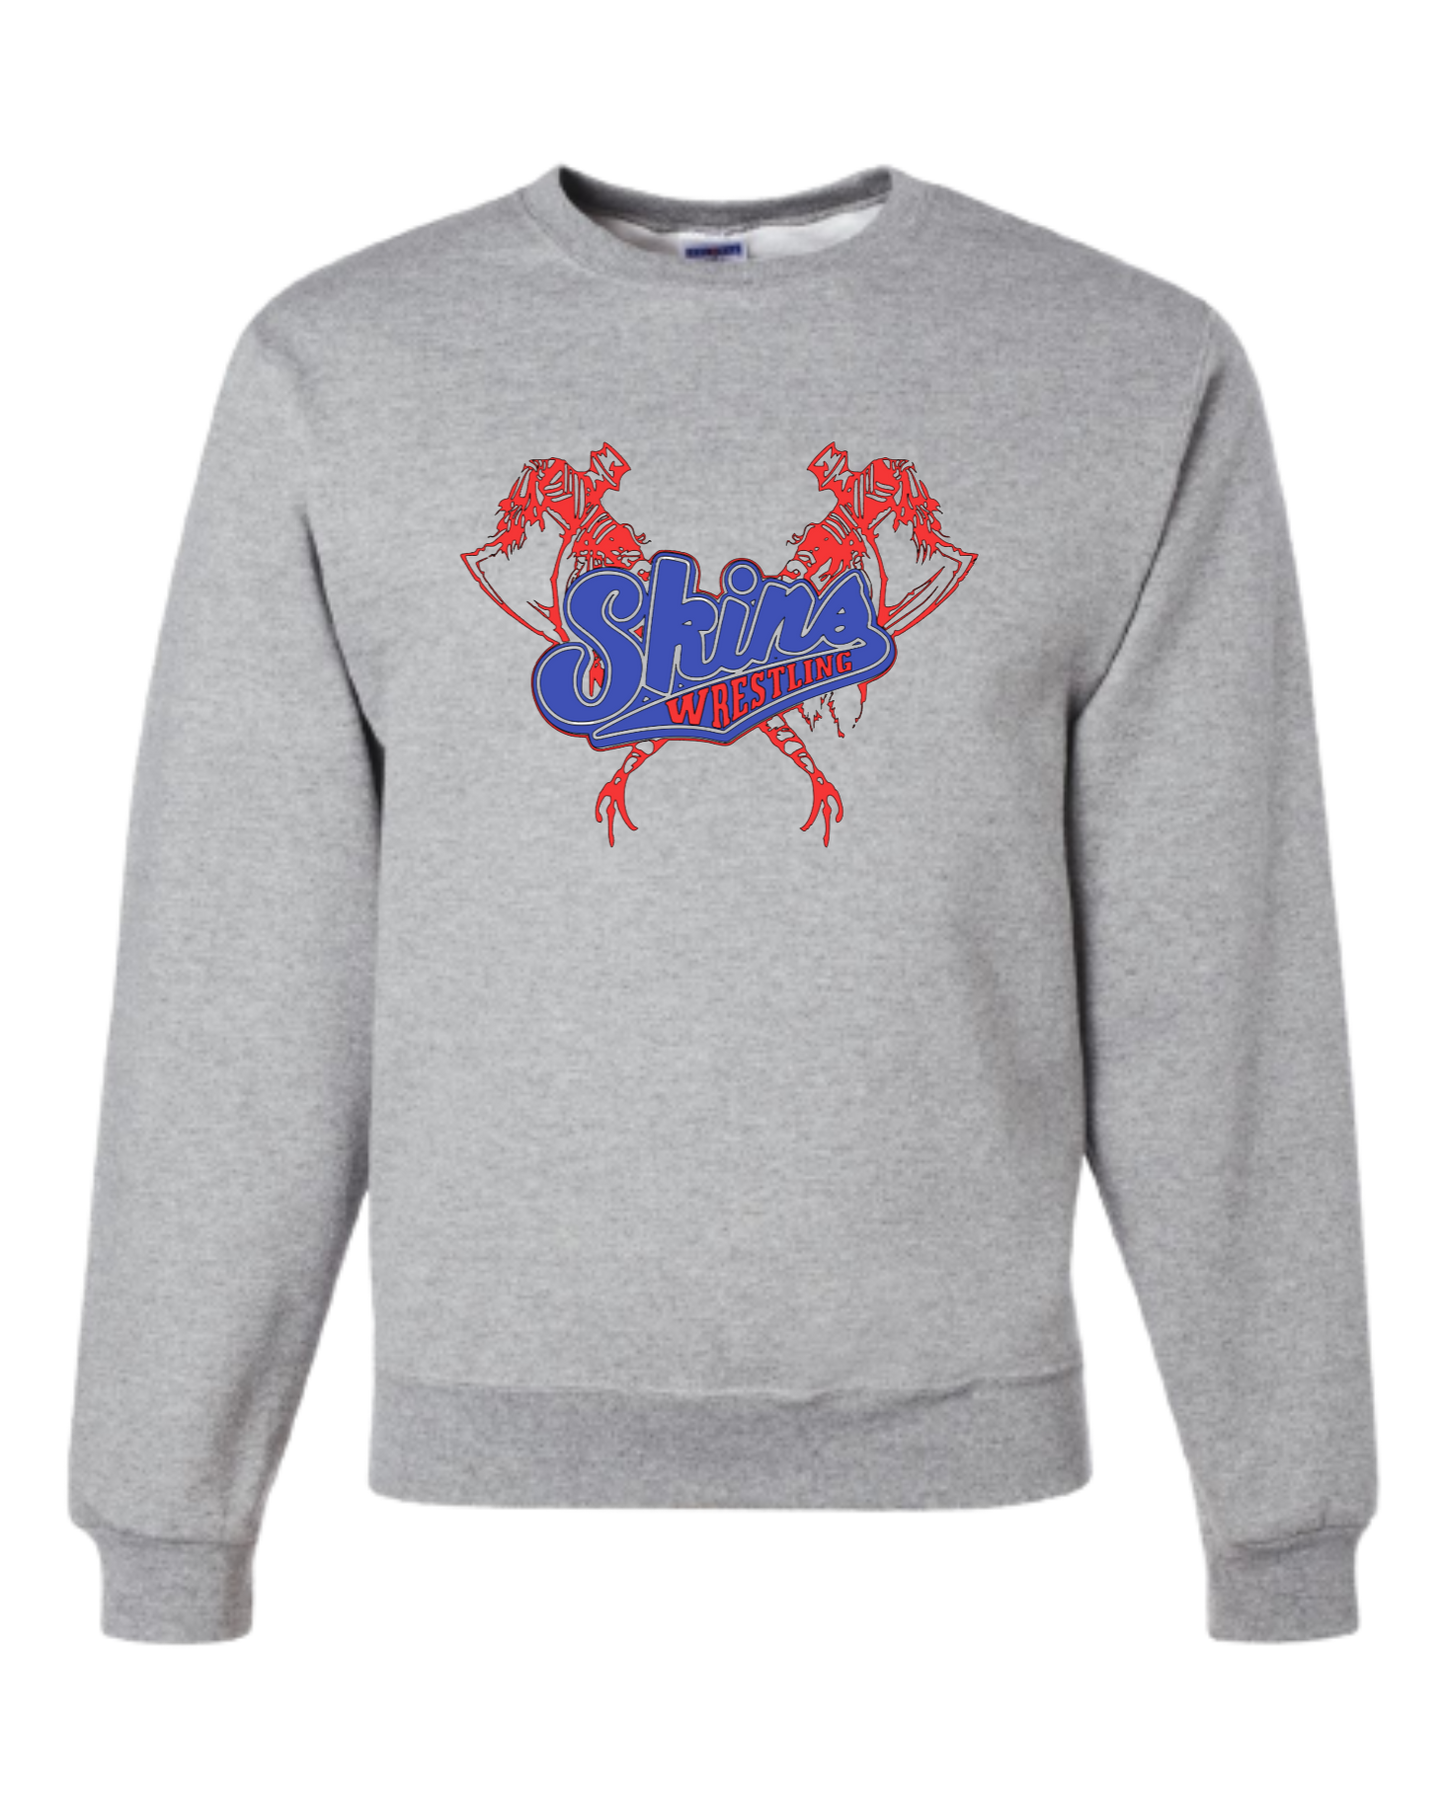 Skins Wrestling Crewneck Sweatshirt - Personalized